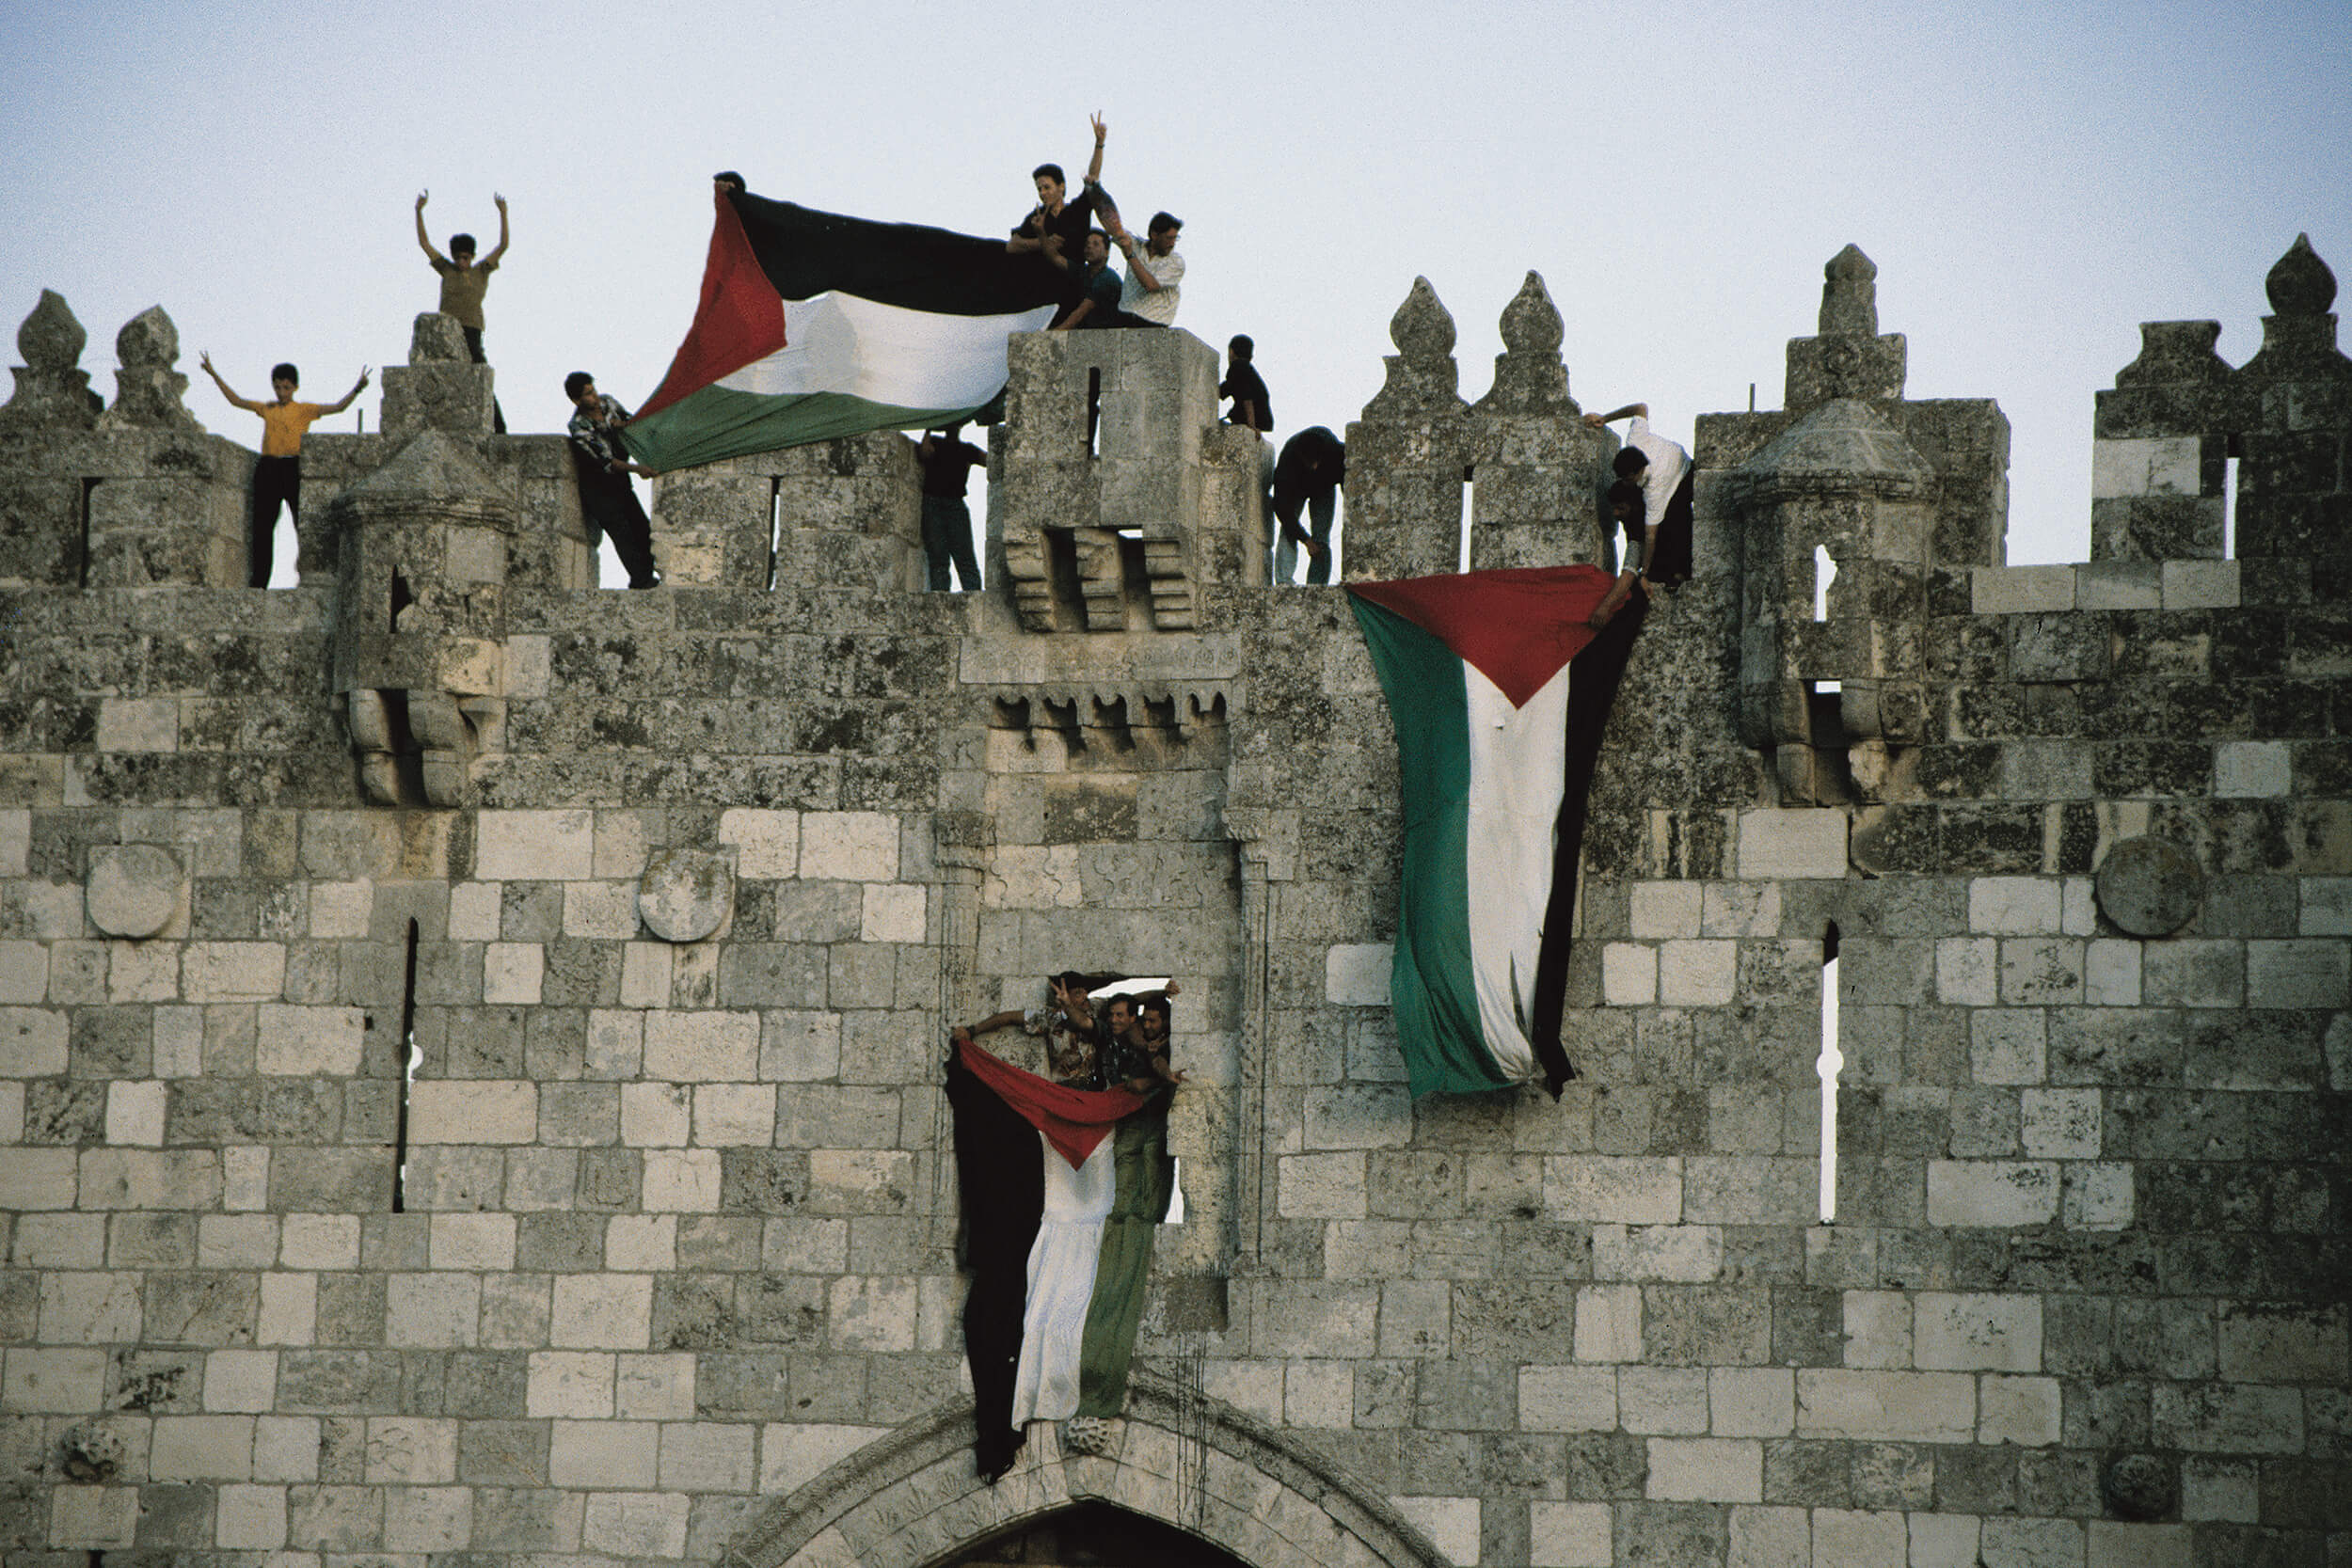  Damaskus Gate, Jerusalem. September 13, 1993 when the Palestinian flag was allowed by Israel. 